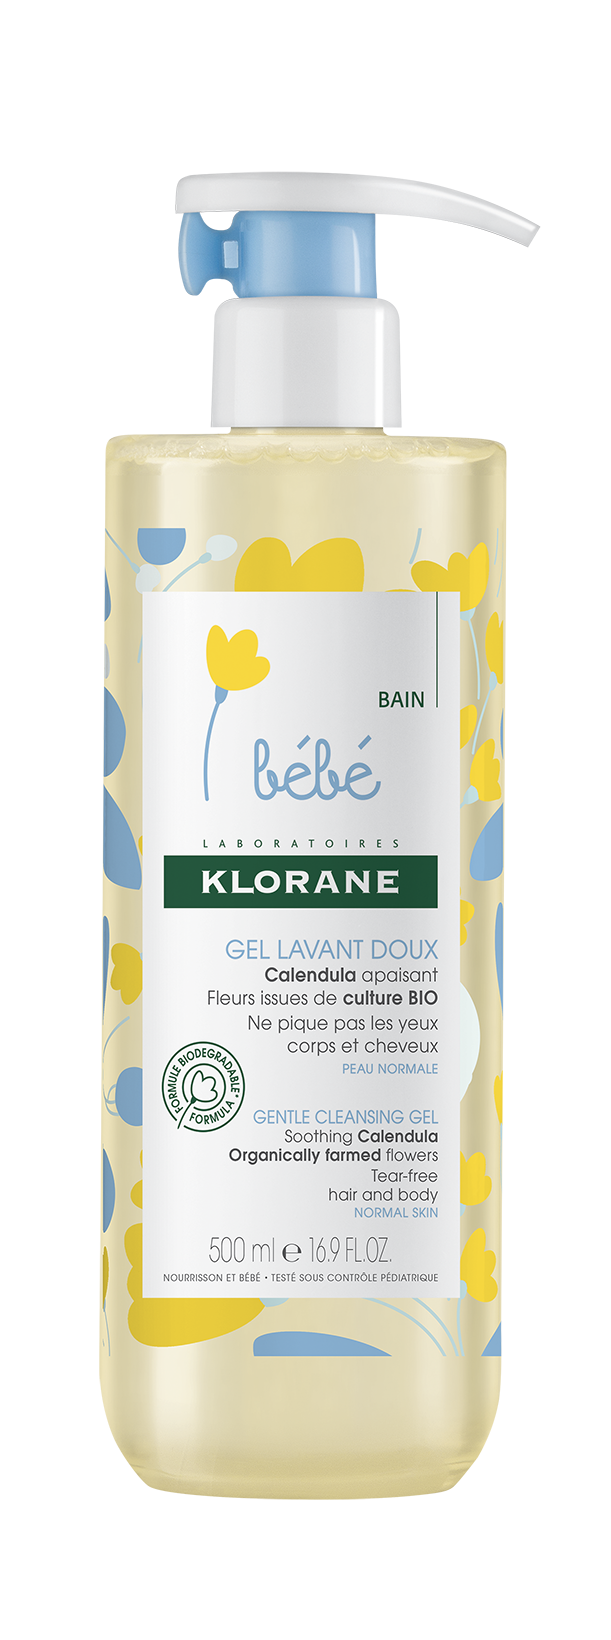 bebe Klorane Lait De Toilette 750 ml 25 fl.oz. no-rinse baby cleansing  lotion